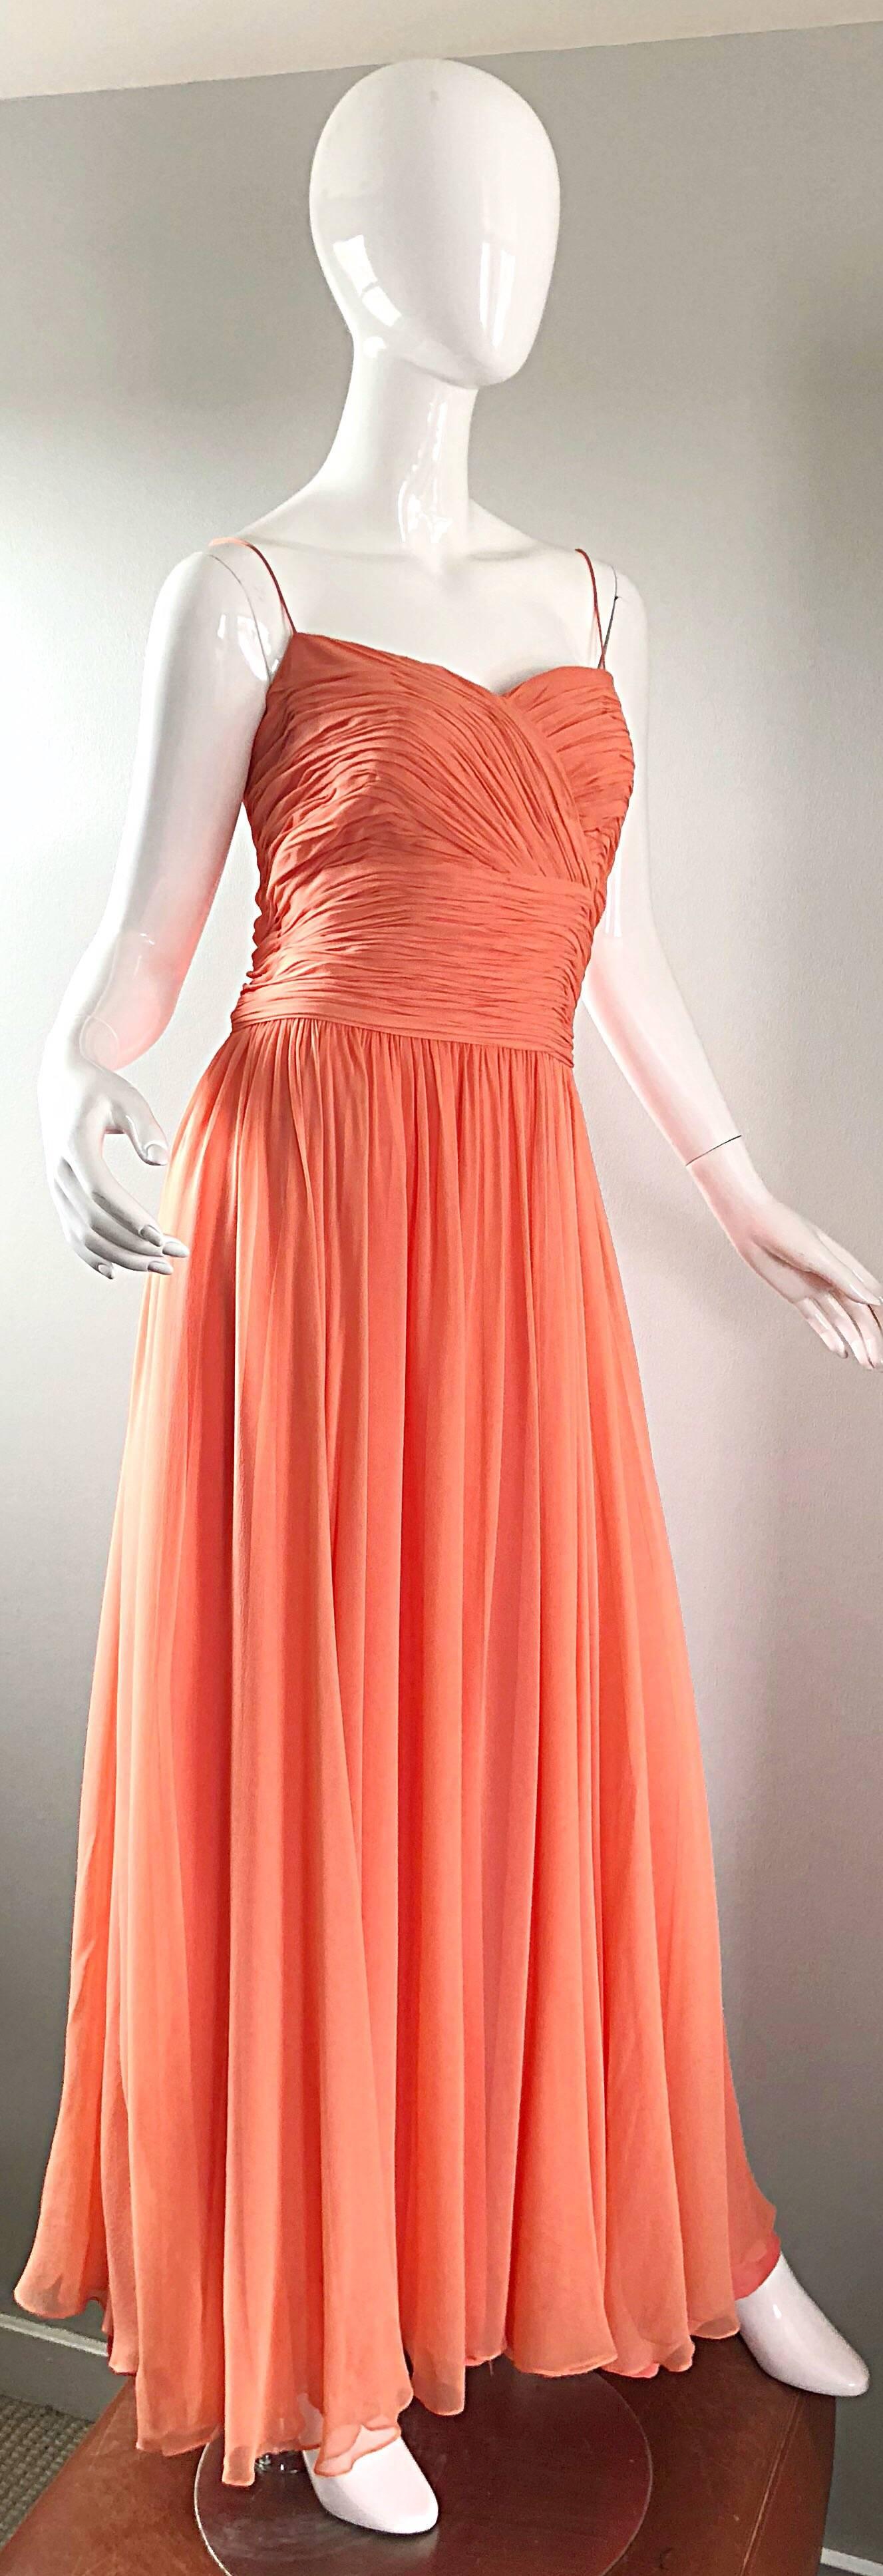 Orange Gorgeous 1950s Saks 5th Ave. Salmon / Coral Pink Silk Chiffon Vintage 50s Gown